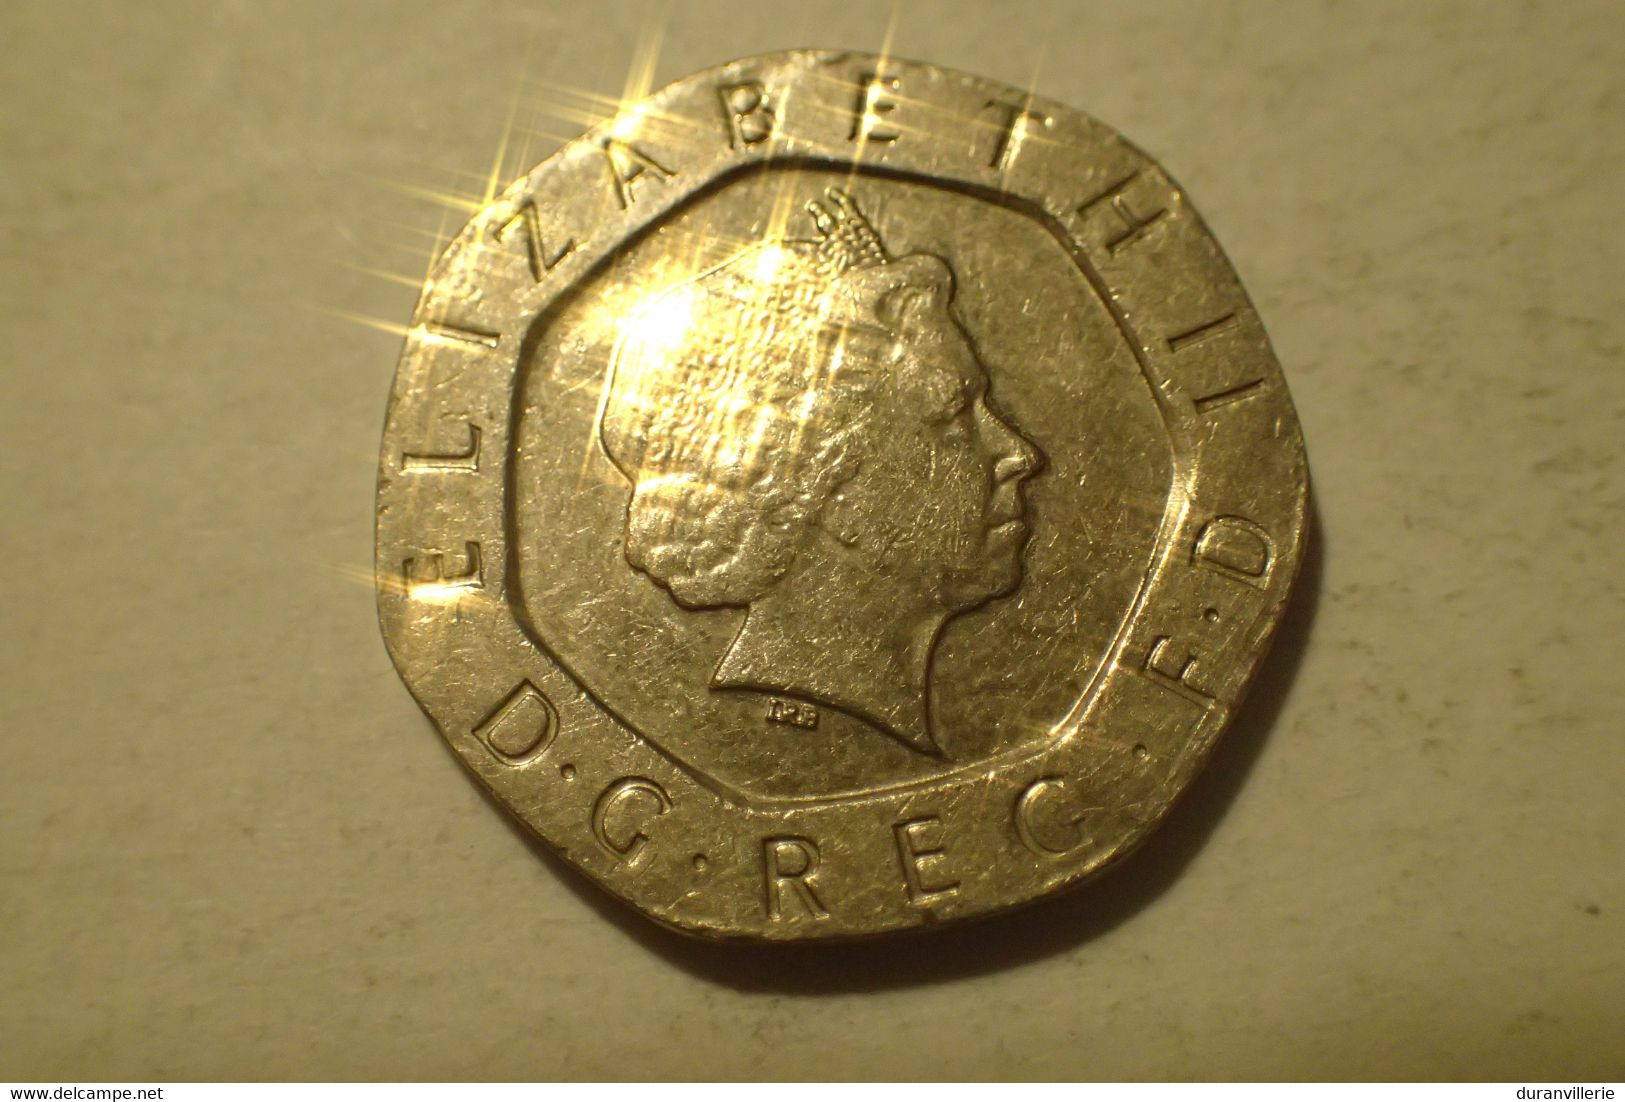 2003 - Grande Bretagne - Great Britain - 20 PENCE, ELIZABETH II, 4è Effigie, Type Rose, KM 990 - 20 Pence